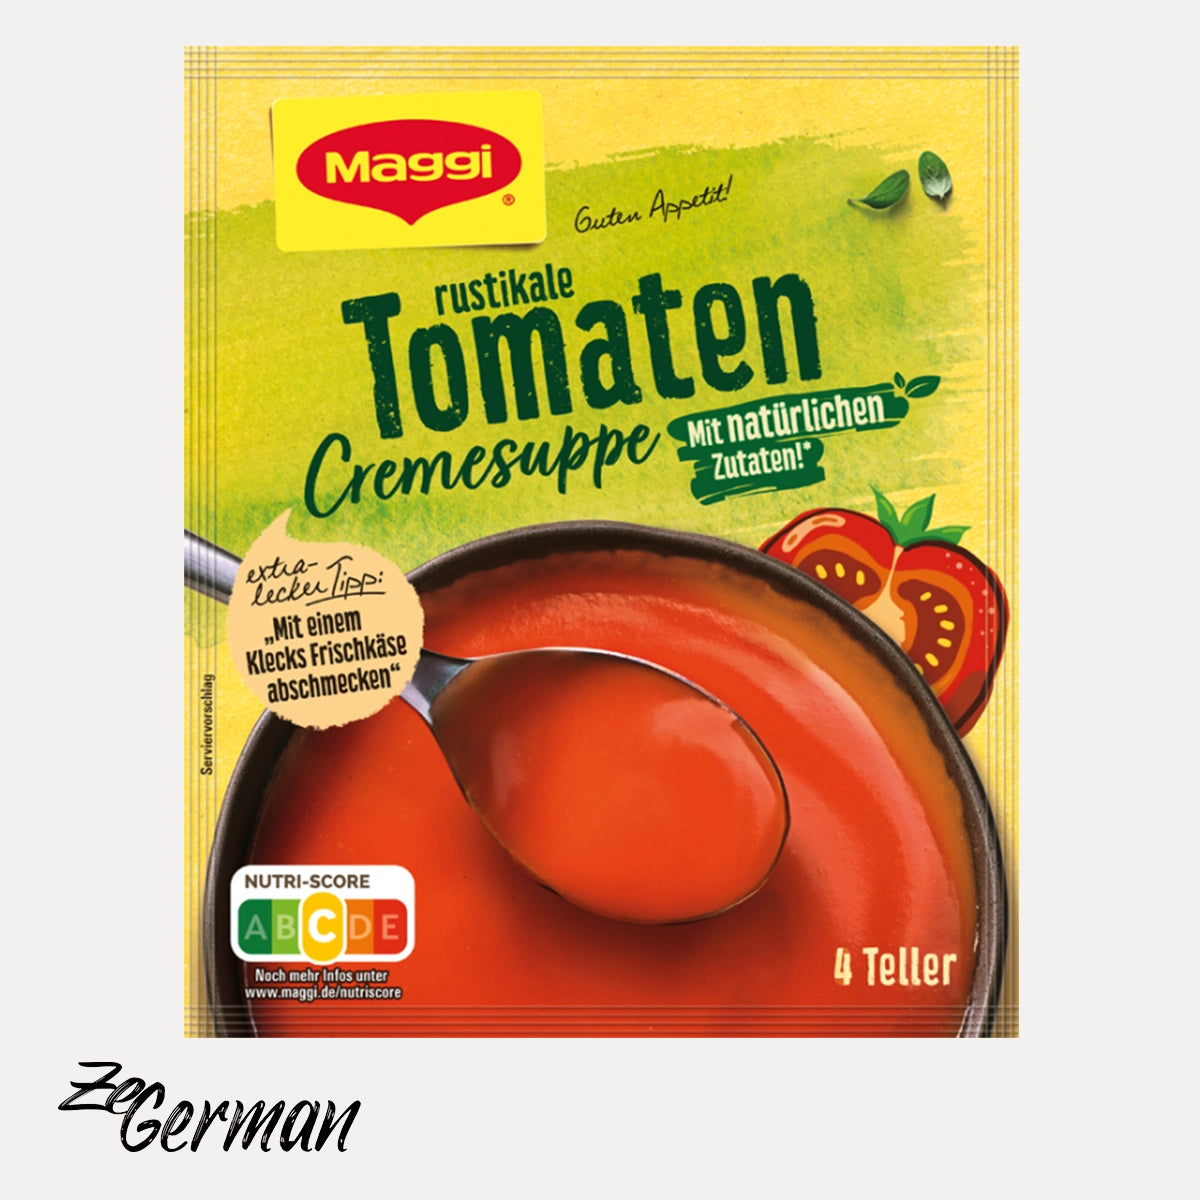 Bon appetit "Tomato cream soup"